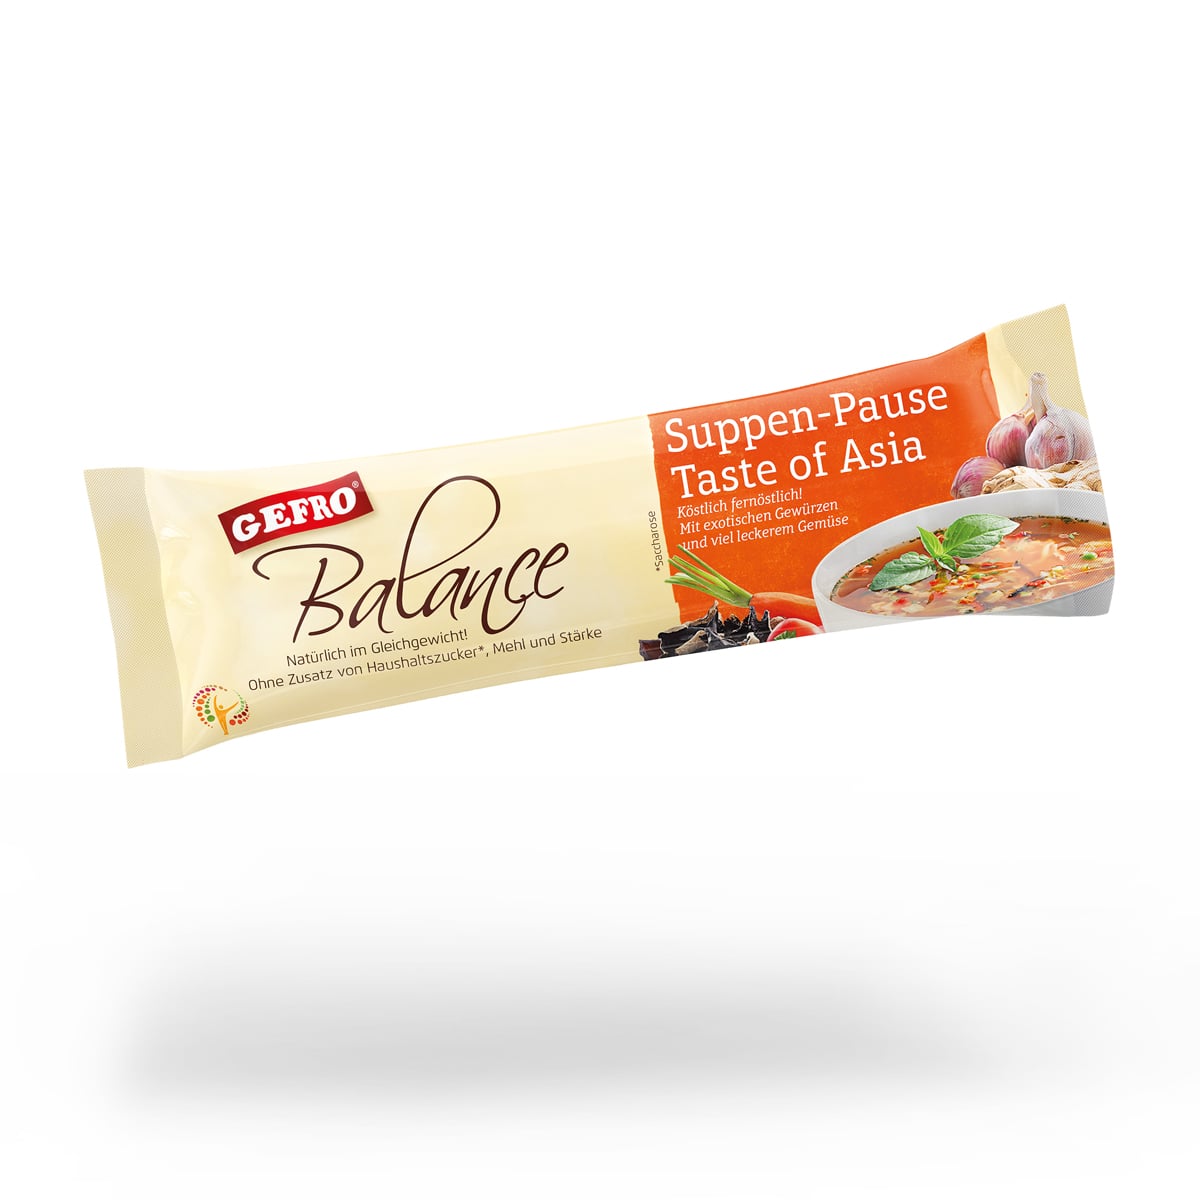 Gefro Balance Taste of Asia levespor